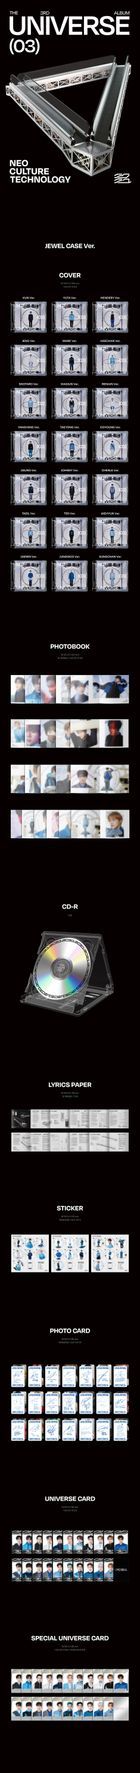 NCT Vol. 3 - Universe (Jewel Case Version) (Jae Hyun Version)